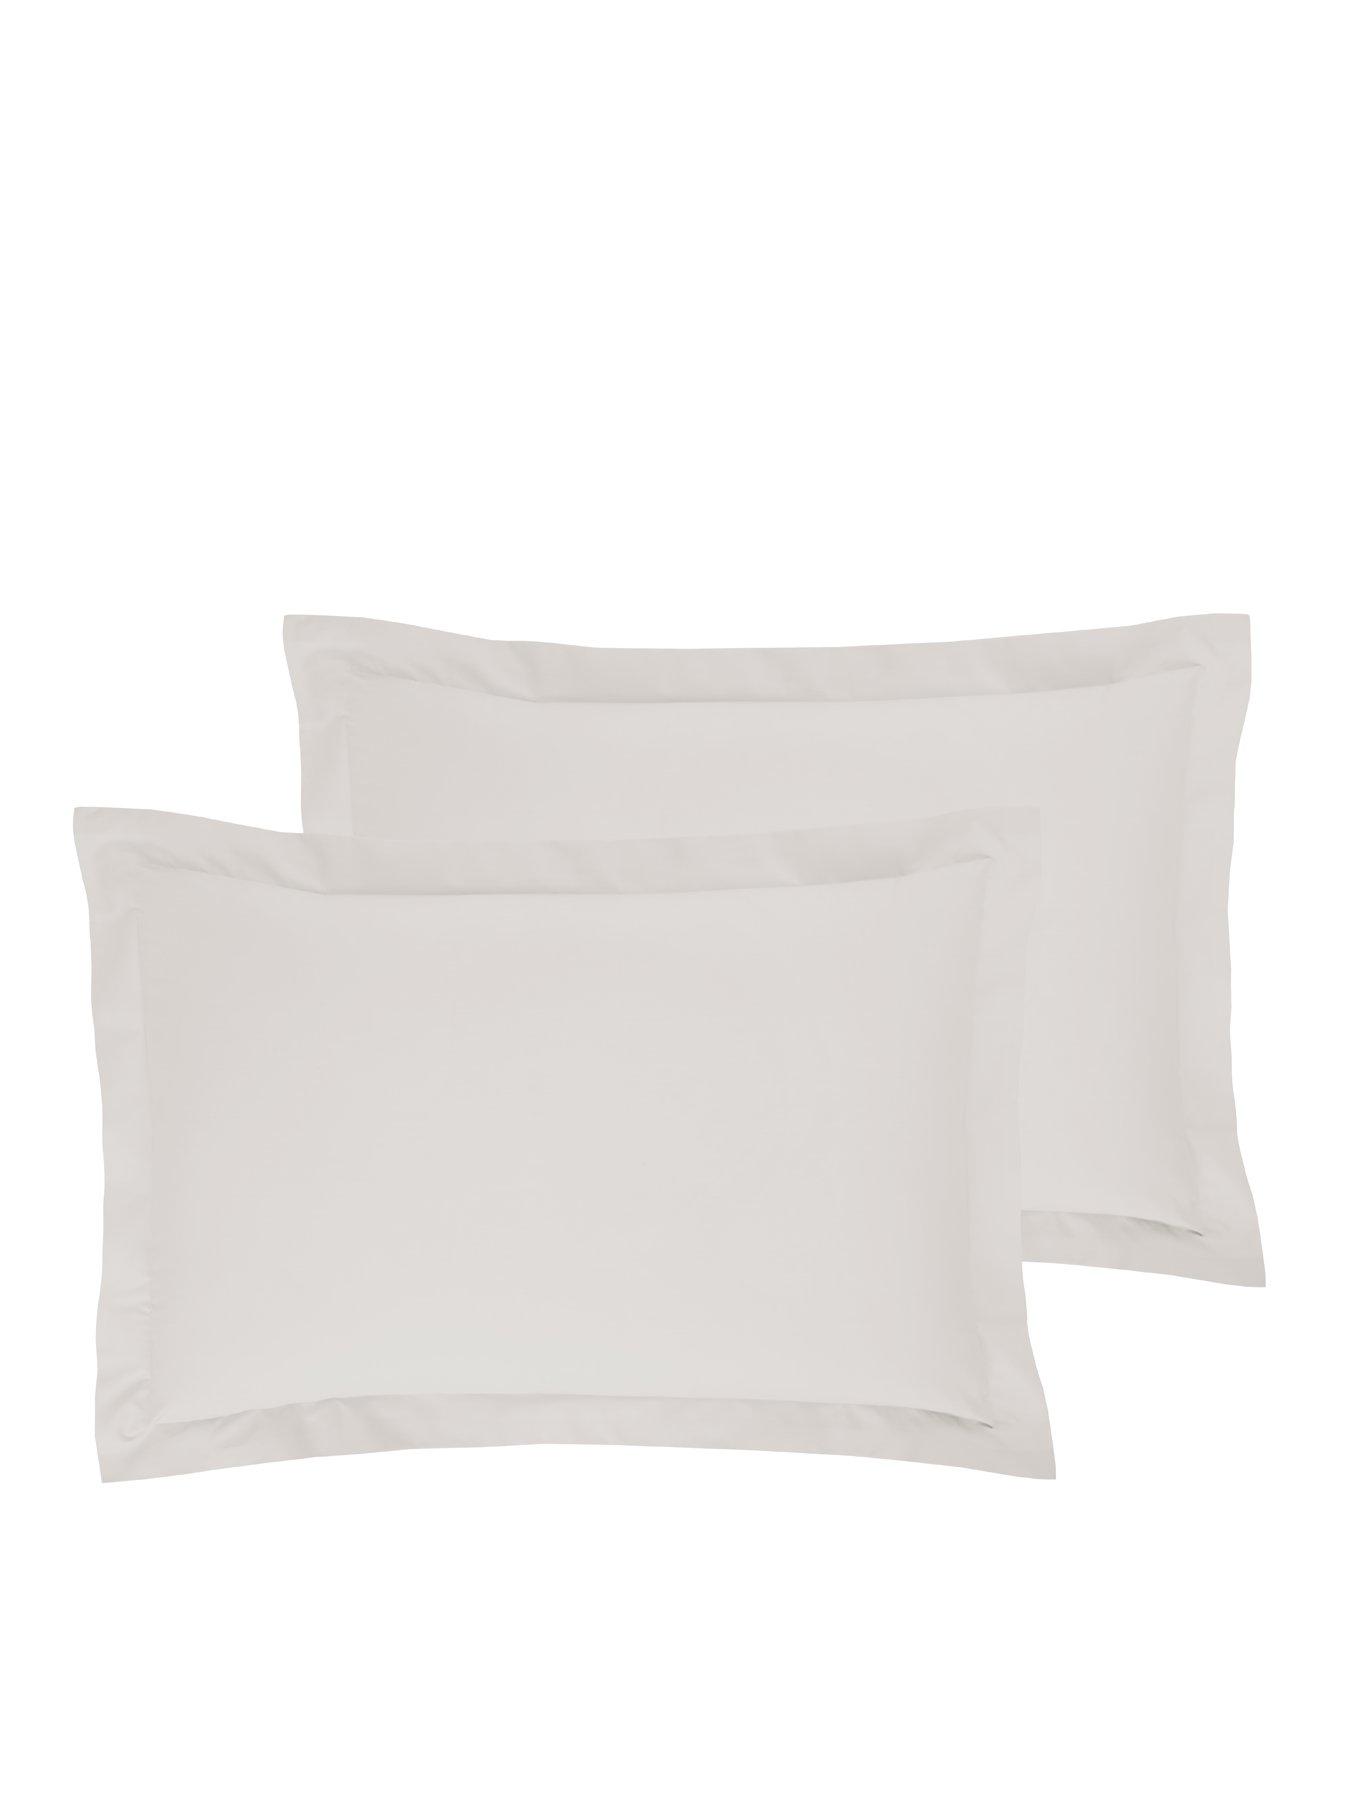 100/% Egyptian Cotton Oxford Pillow Cases Cotton Rich 200TC Super Soft Pillowcase